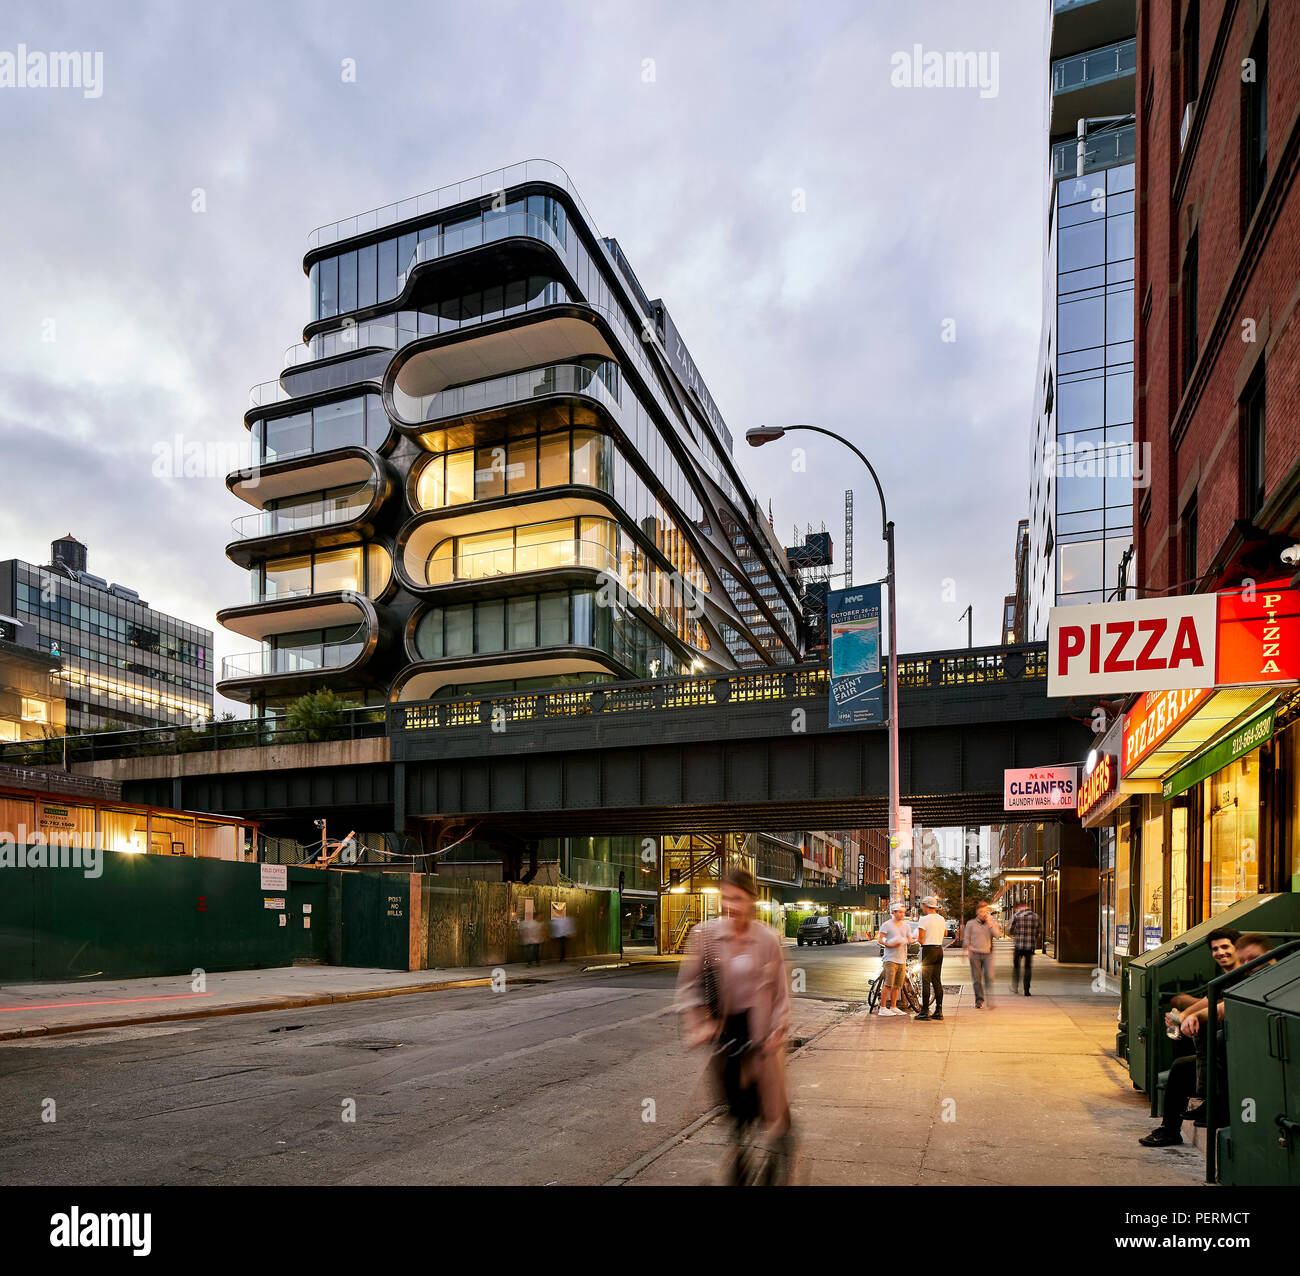 Façade extérieure avec vue sur New York Street. 520 West 28th Street, New York, United States. Architecte : Zaha Hadid Architects, 2017. Banque D'Images